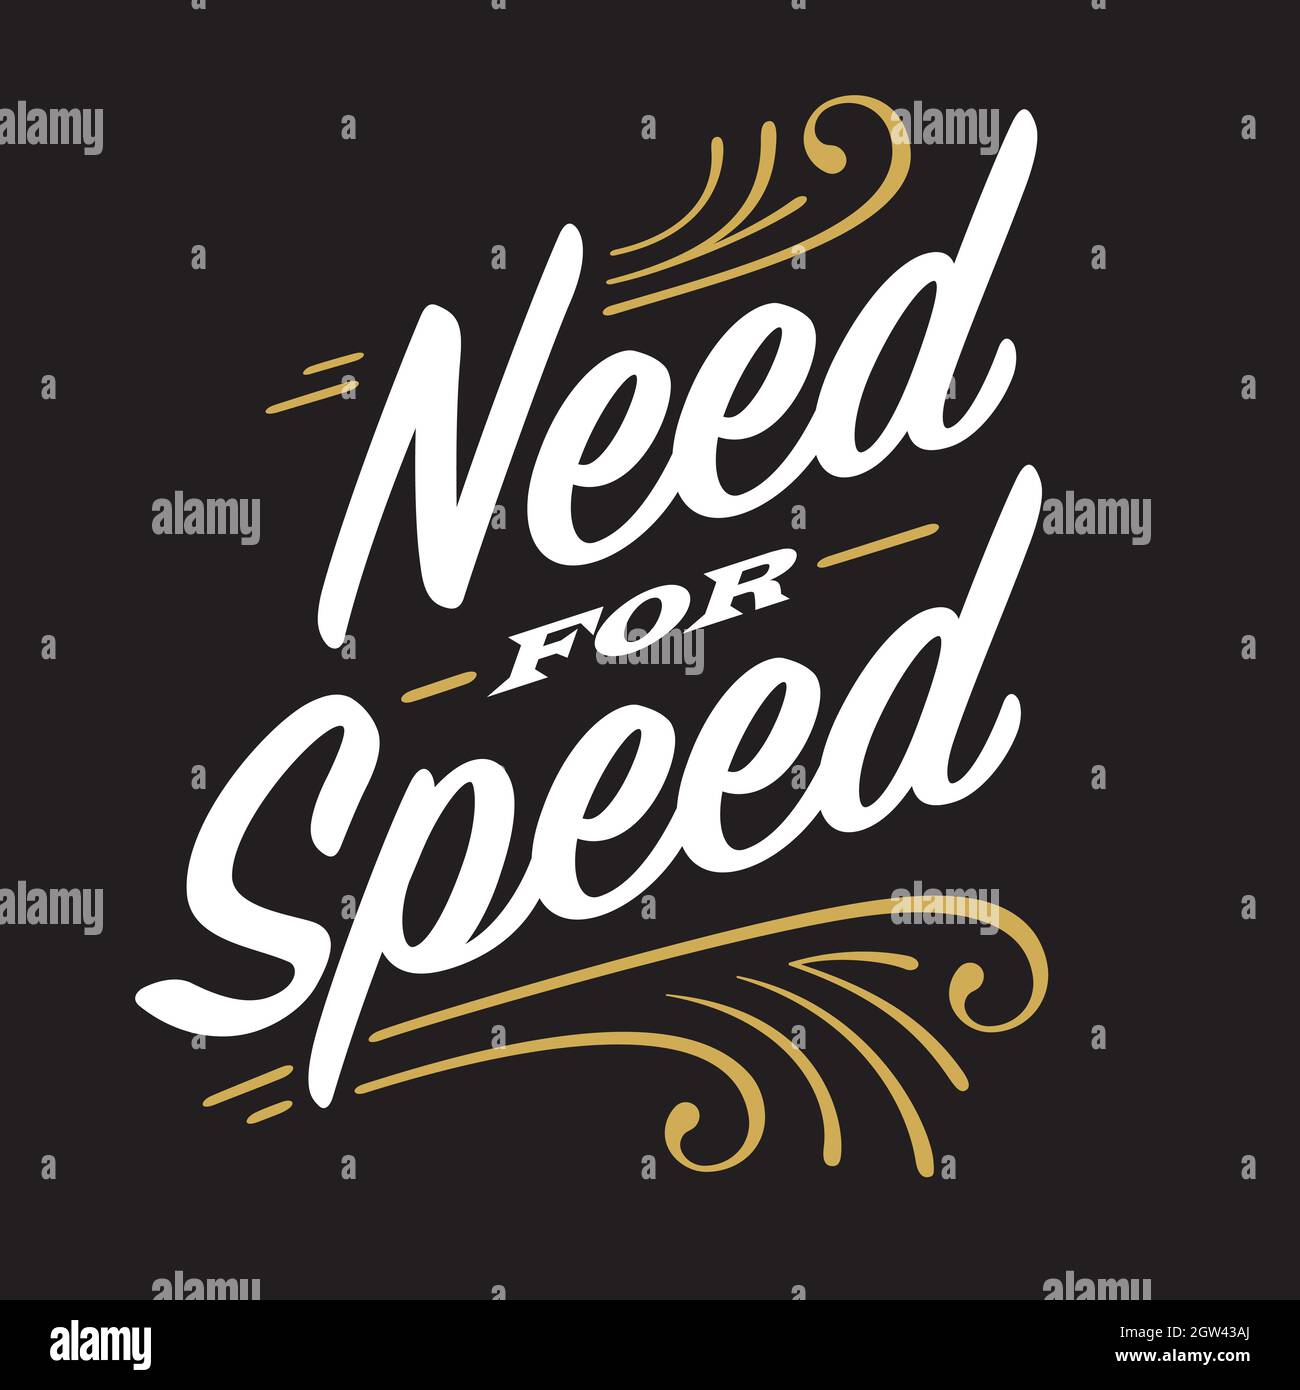 Need for Speed Custom Hotrod-Schriftzug. Vektor-Illustration Fancy, verzierter Retro-Stil Skript-Schriftzug mit Nadelstreifen Swashes und Ornamente. Stock Vektor